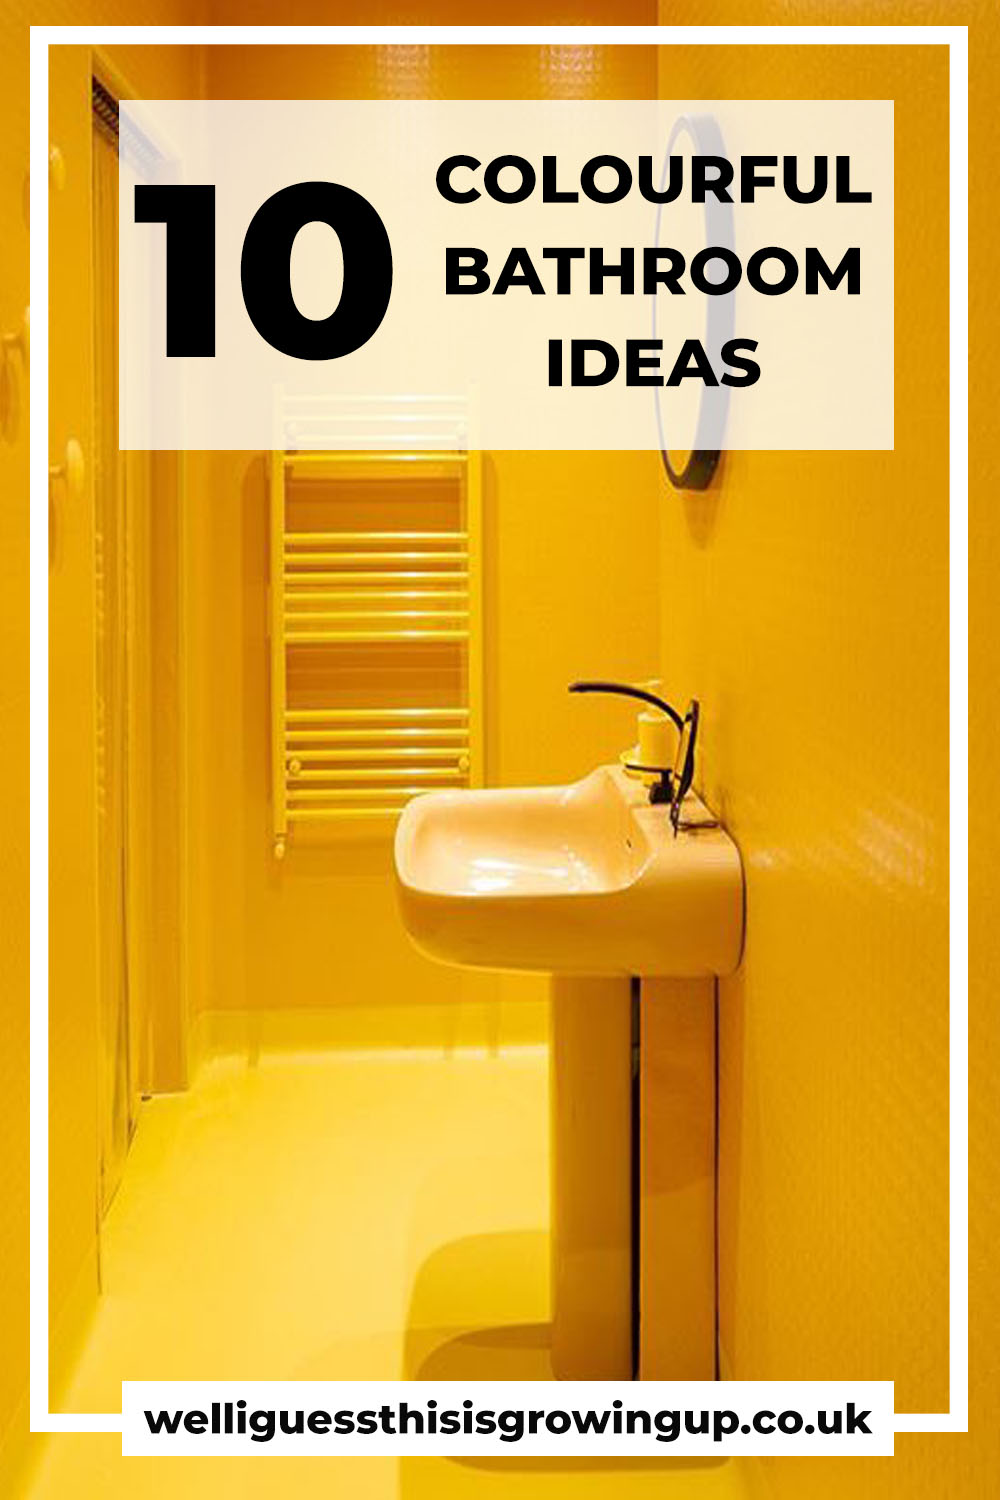 10 COLOURFUL BATHROOM IDEAS